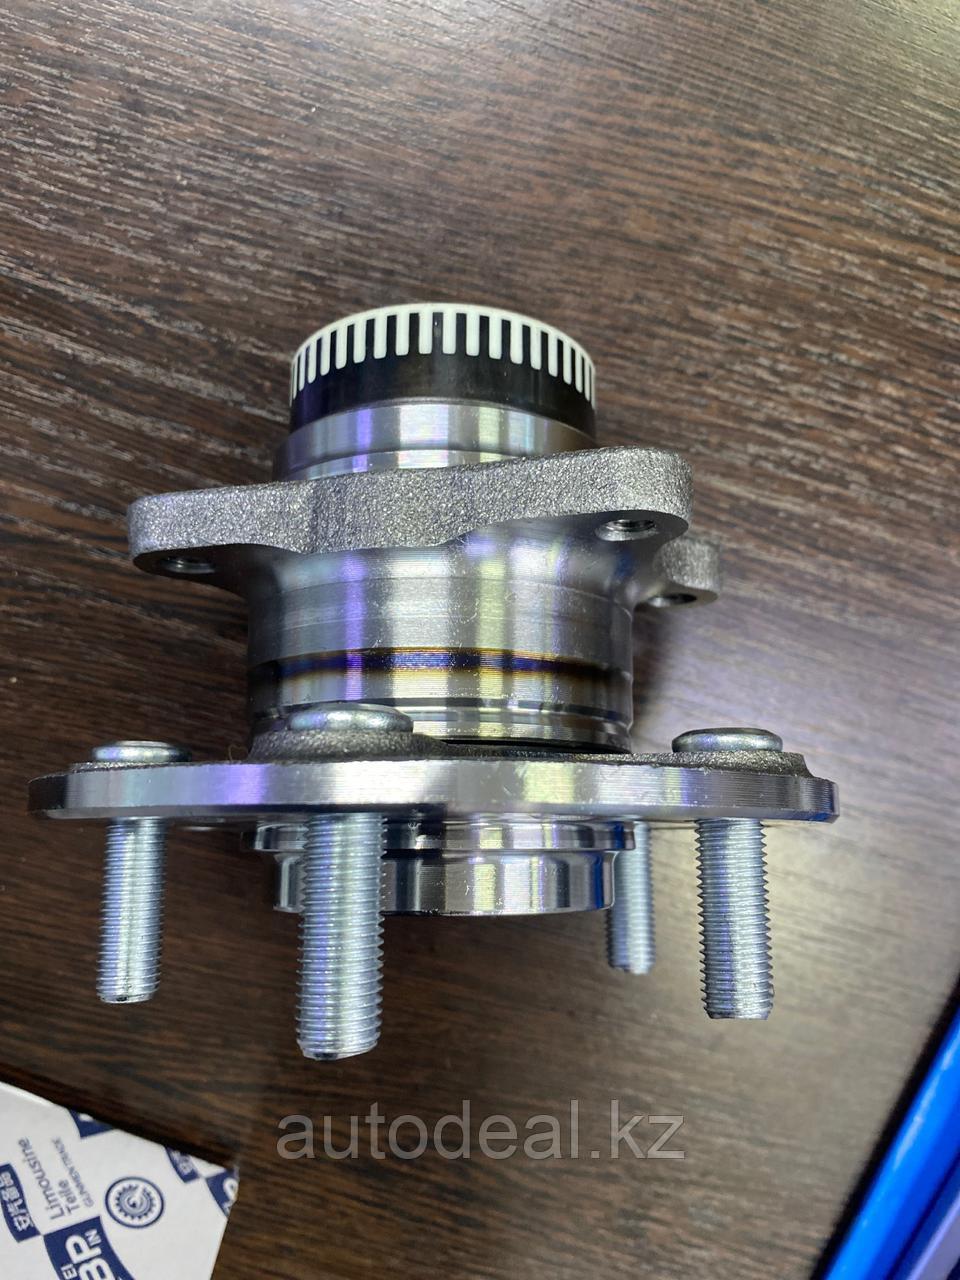 Ступица задняя (в сборе с подшипником) JAC S5 / Rear wheel hub assembly with bearing